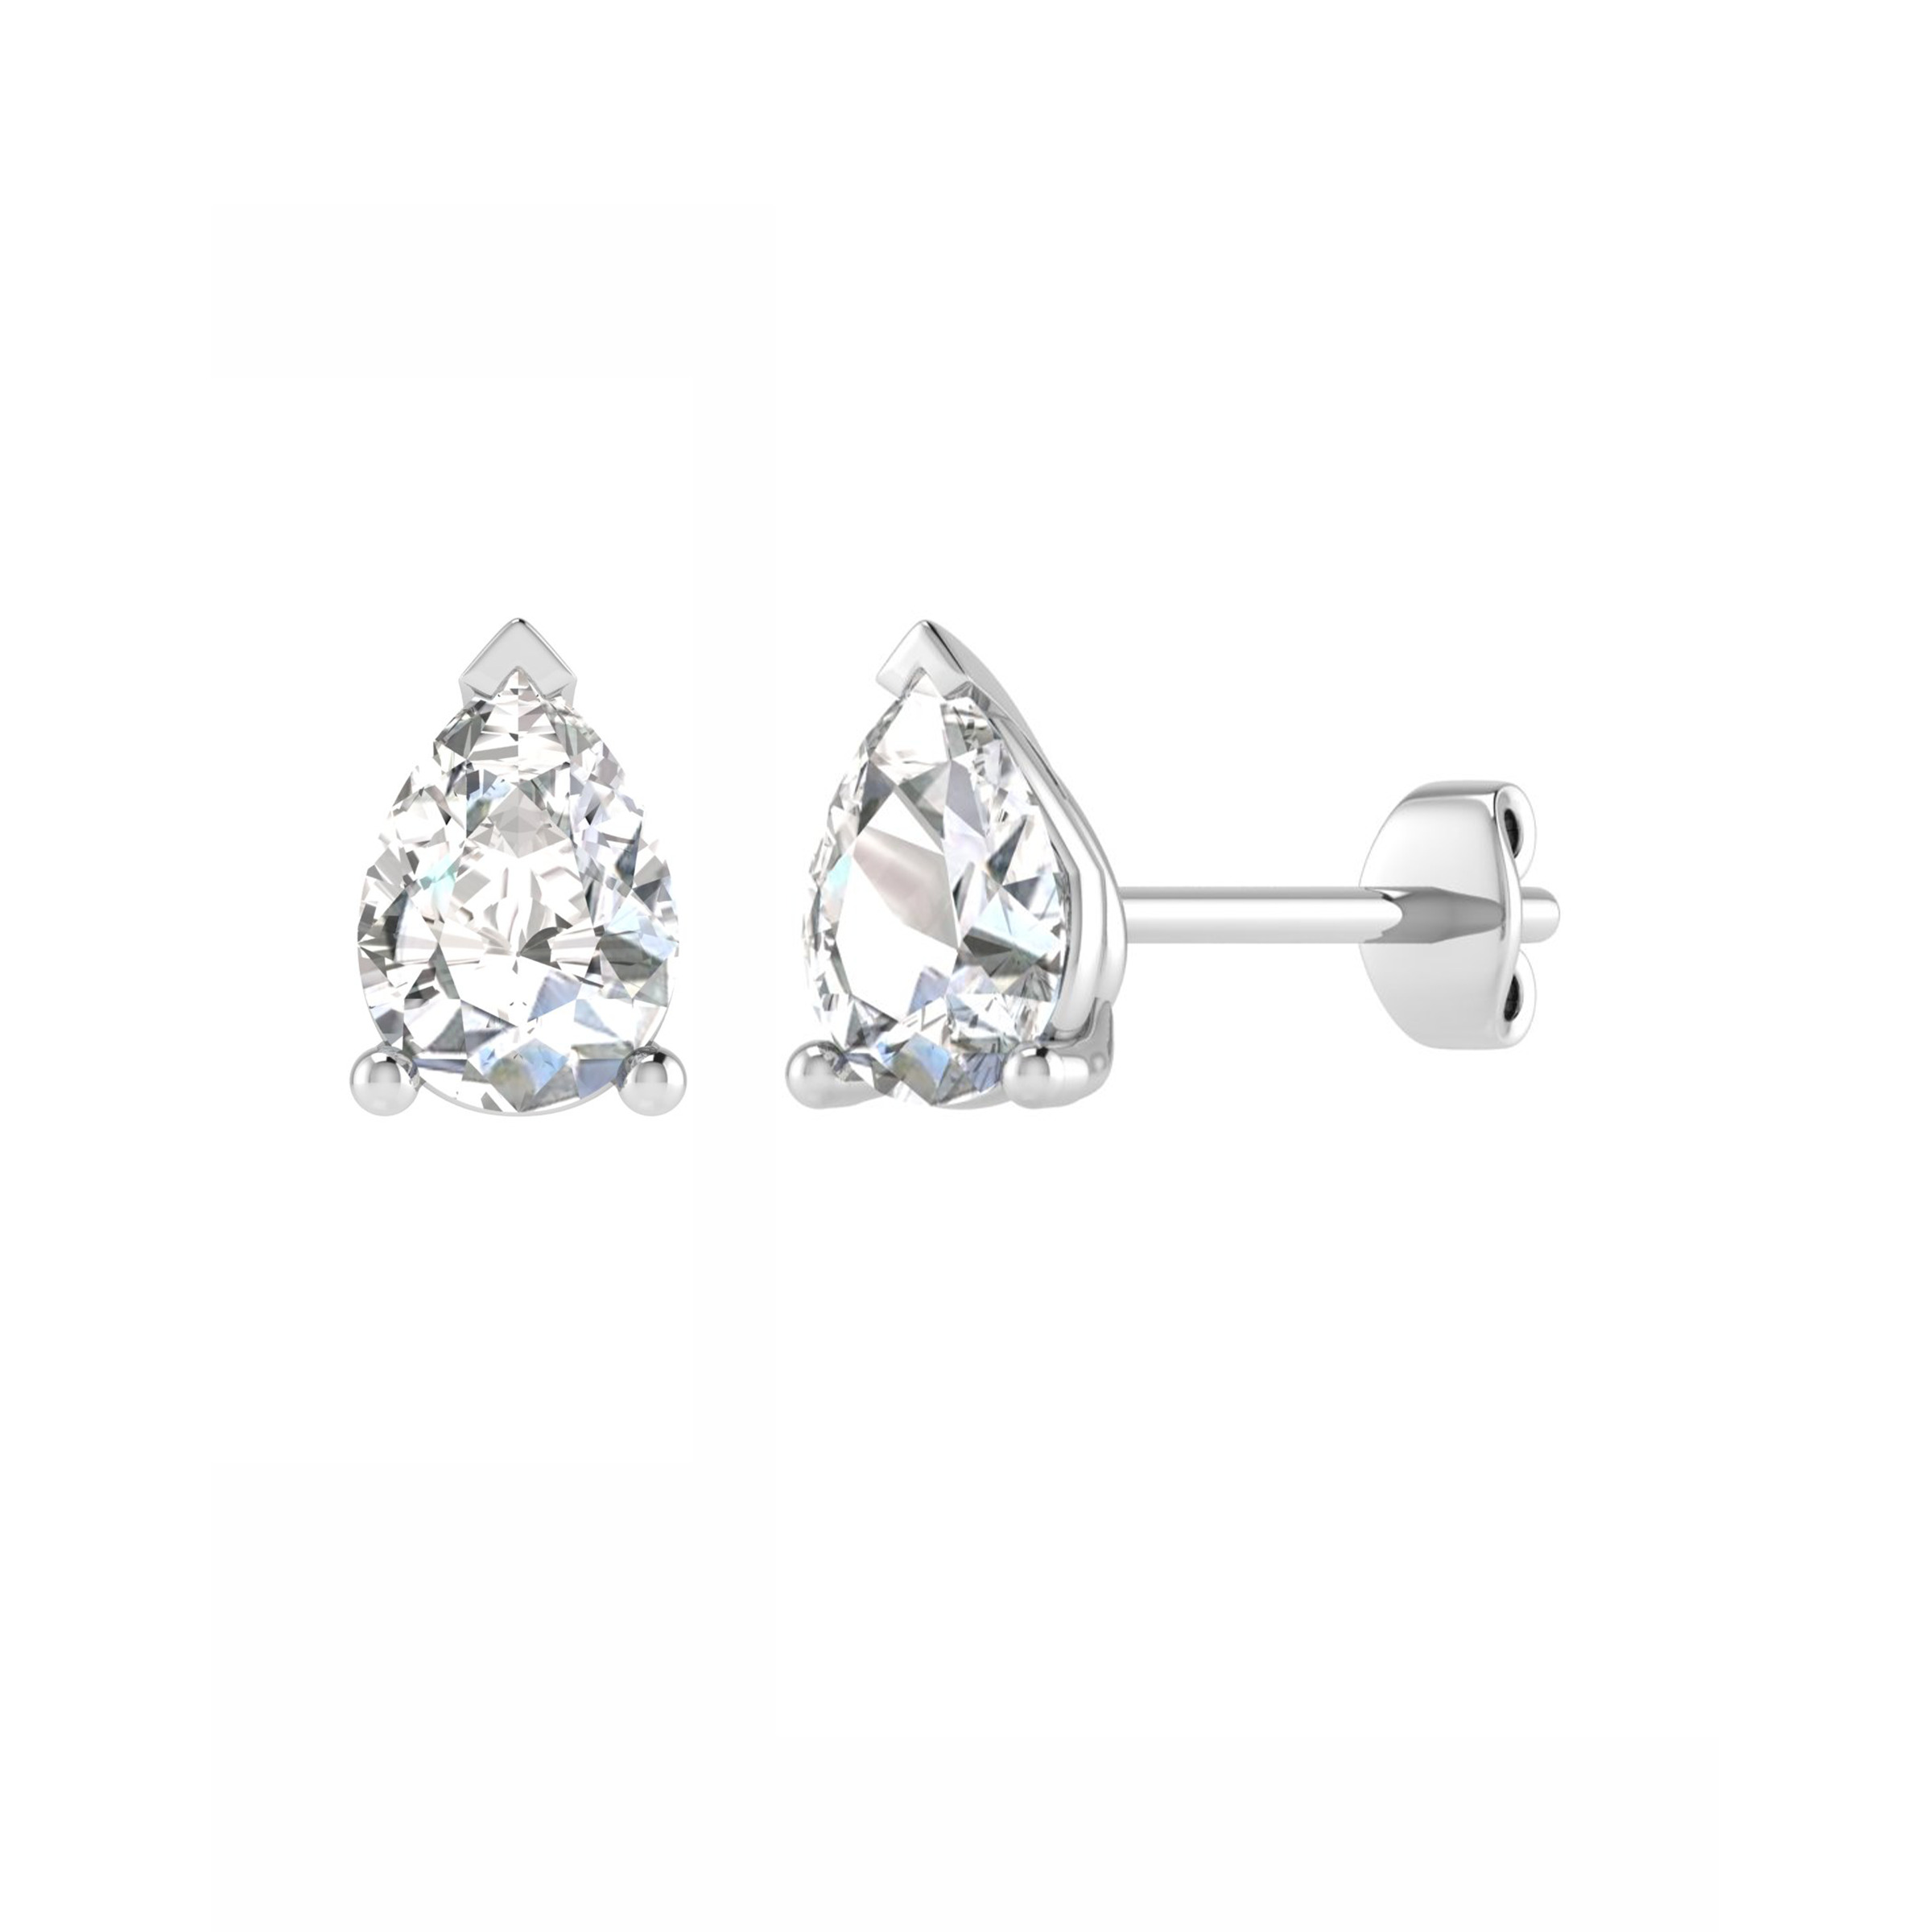 0.20-3.00 Carat Pear Shaped Diamond Solitaire Stud Earrings